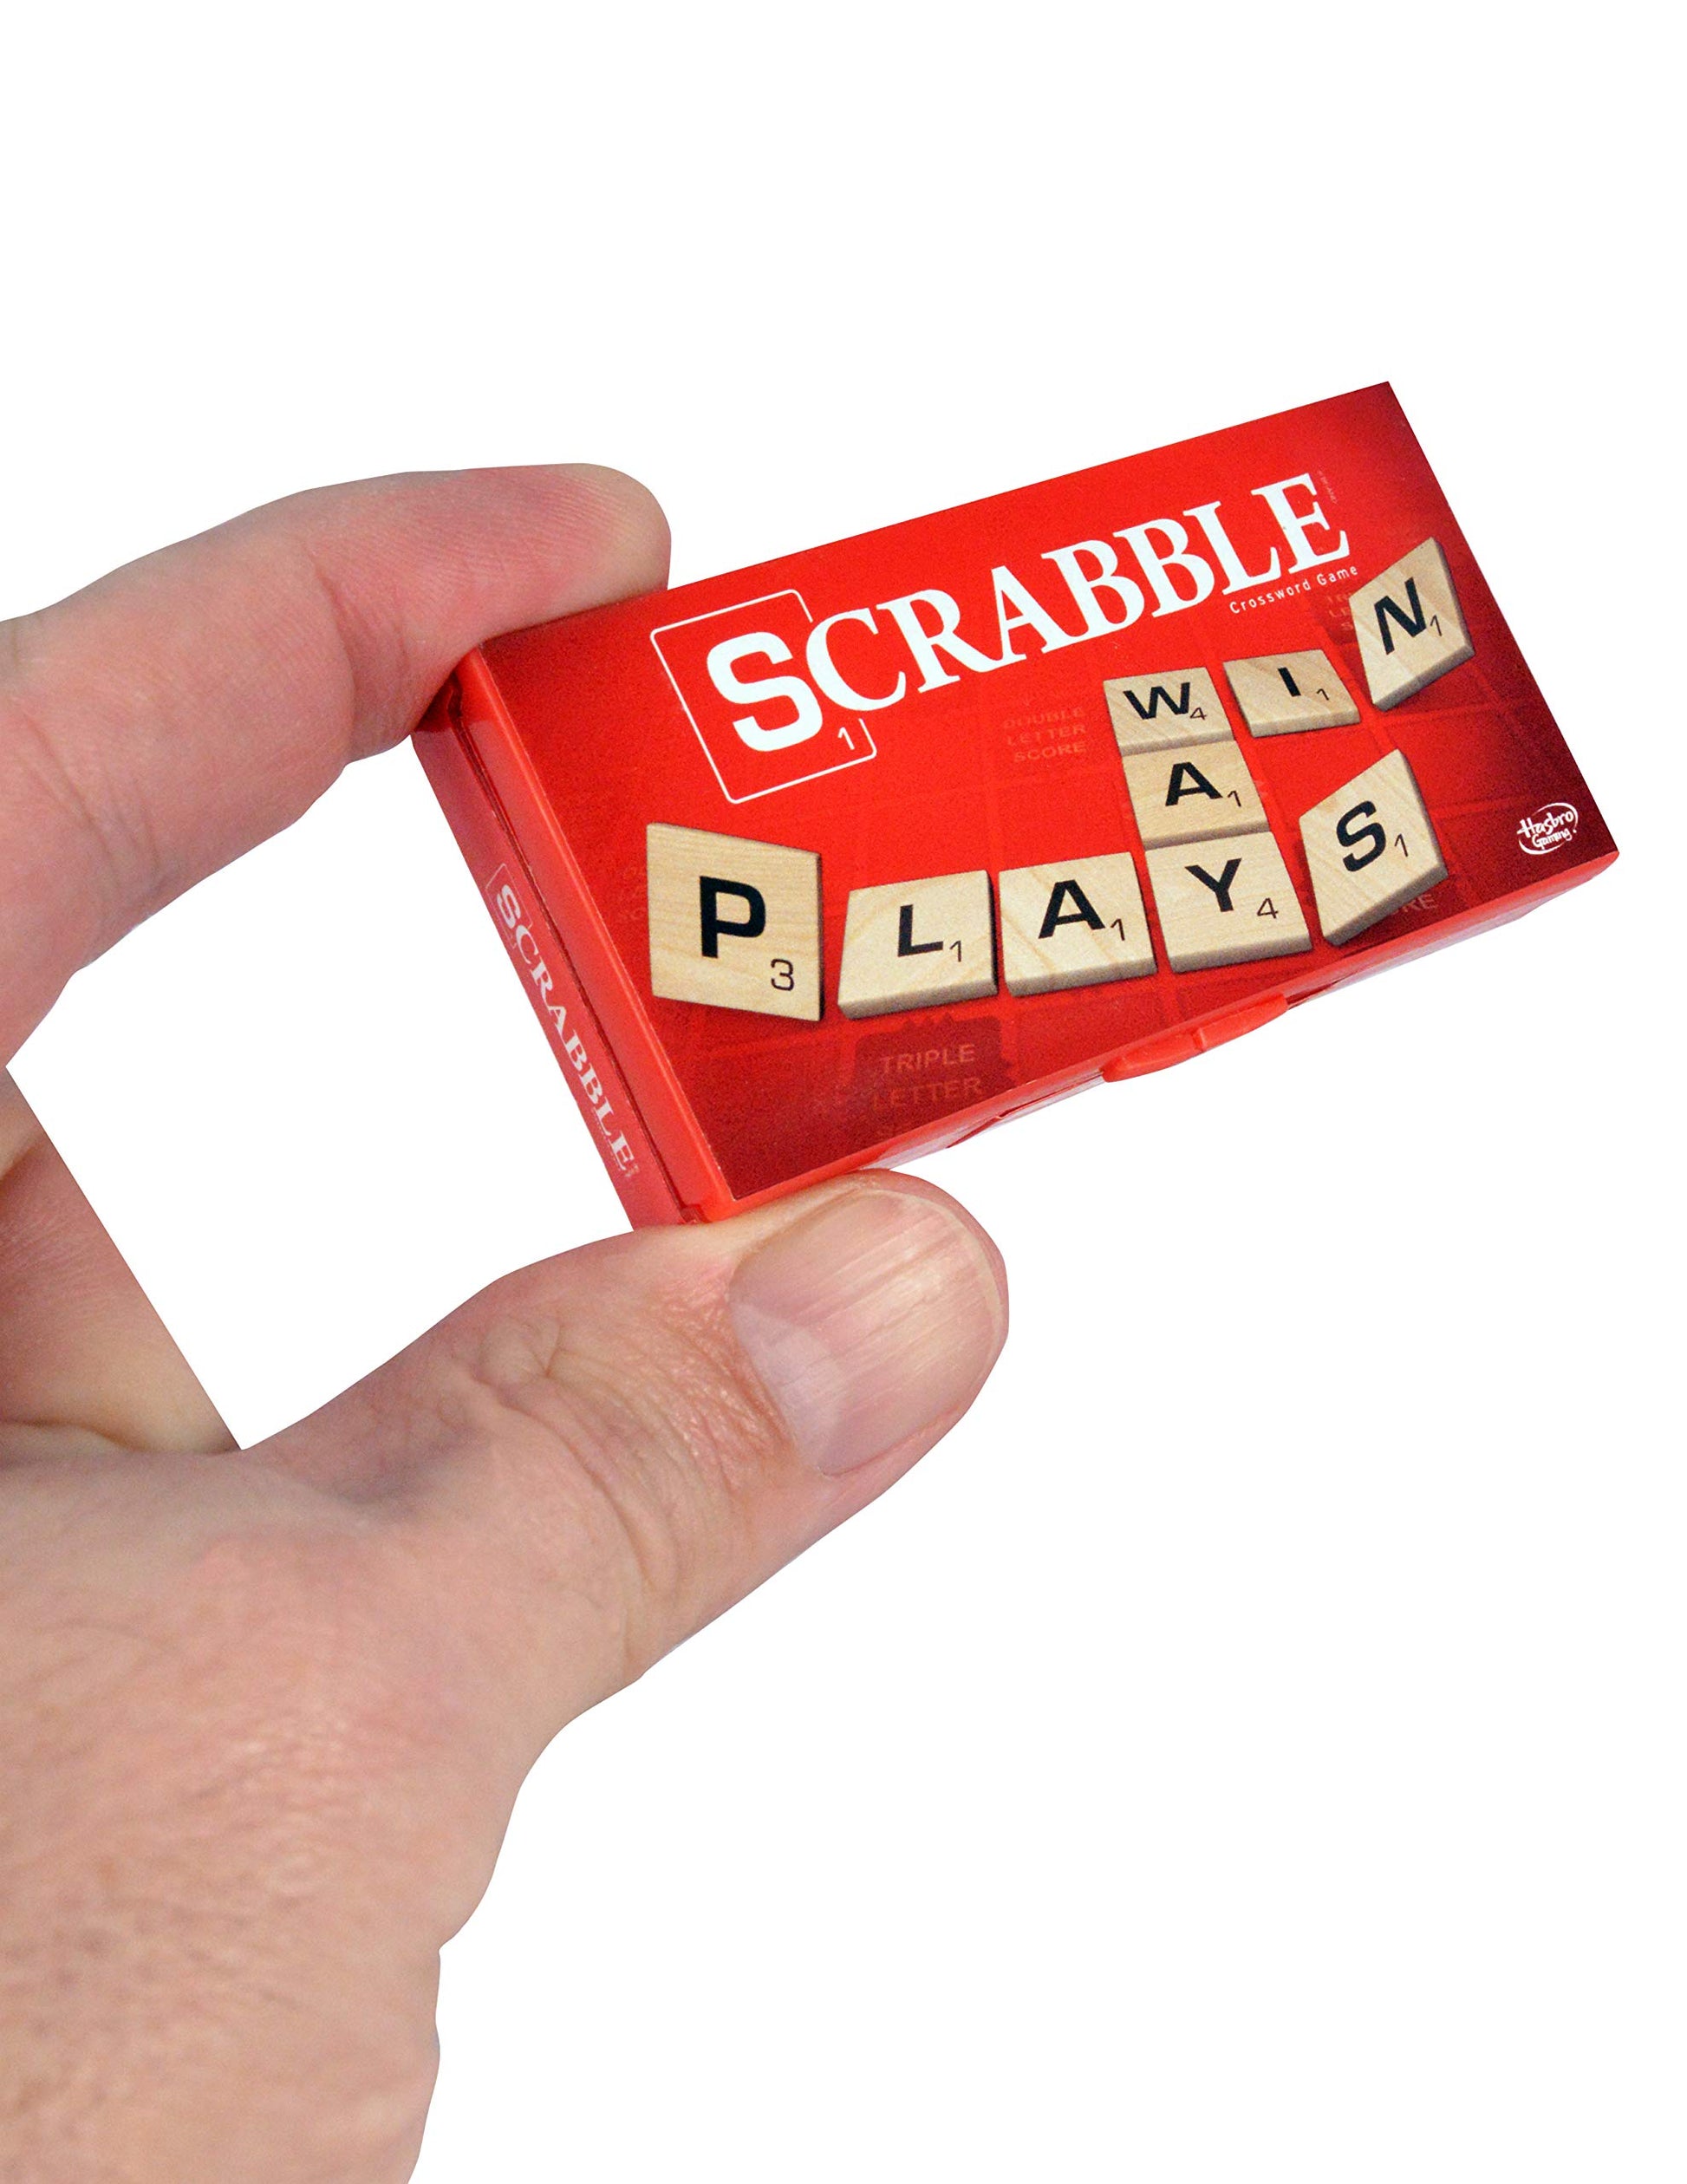 World's Smallest Scrabble Game